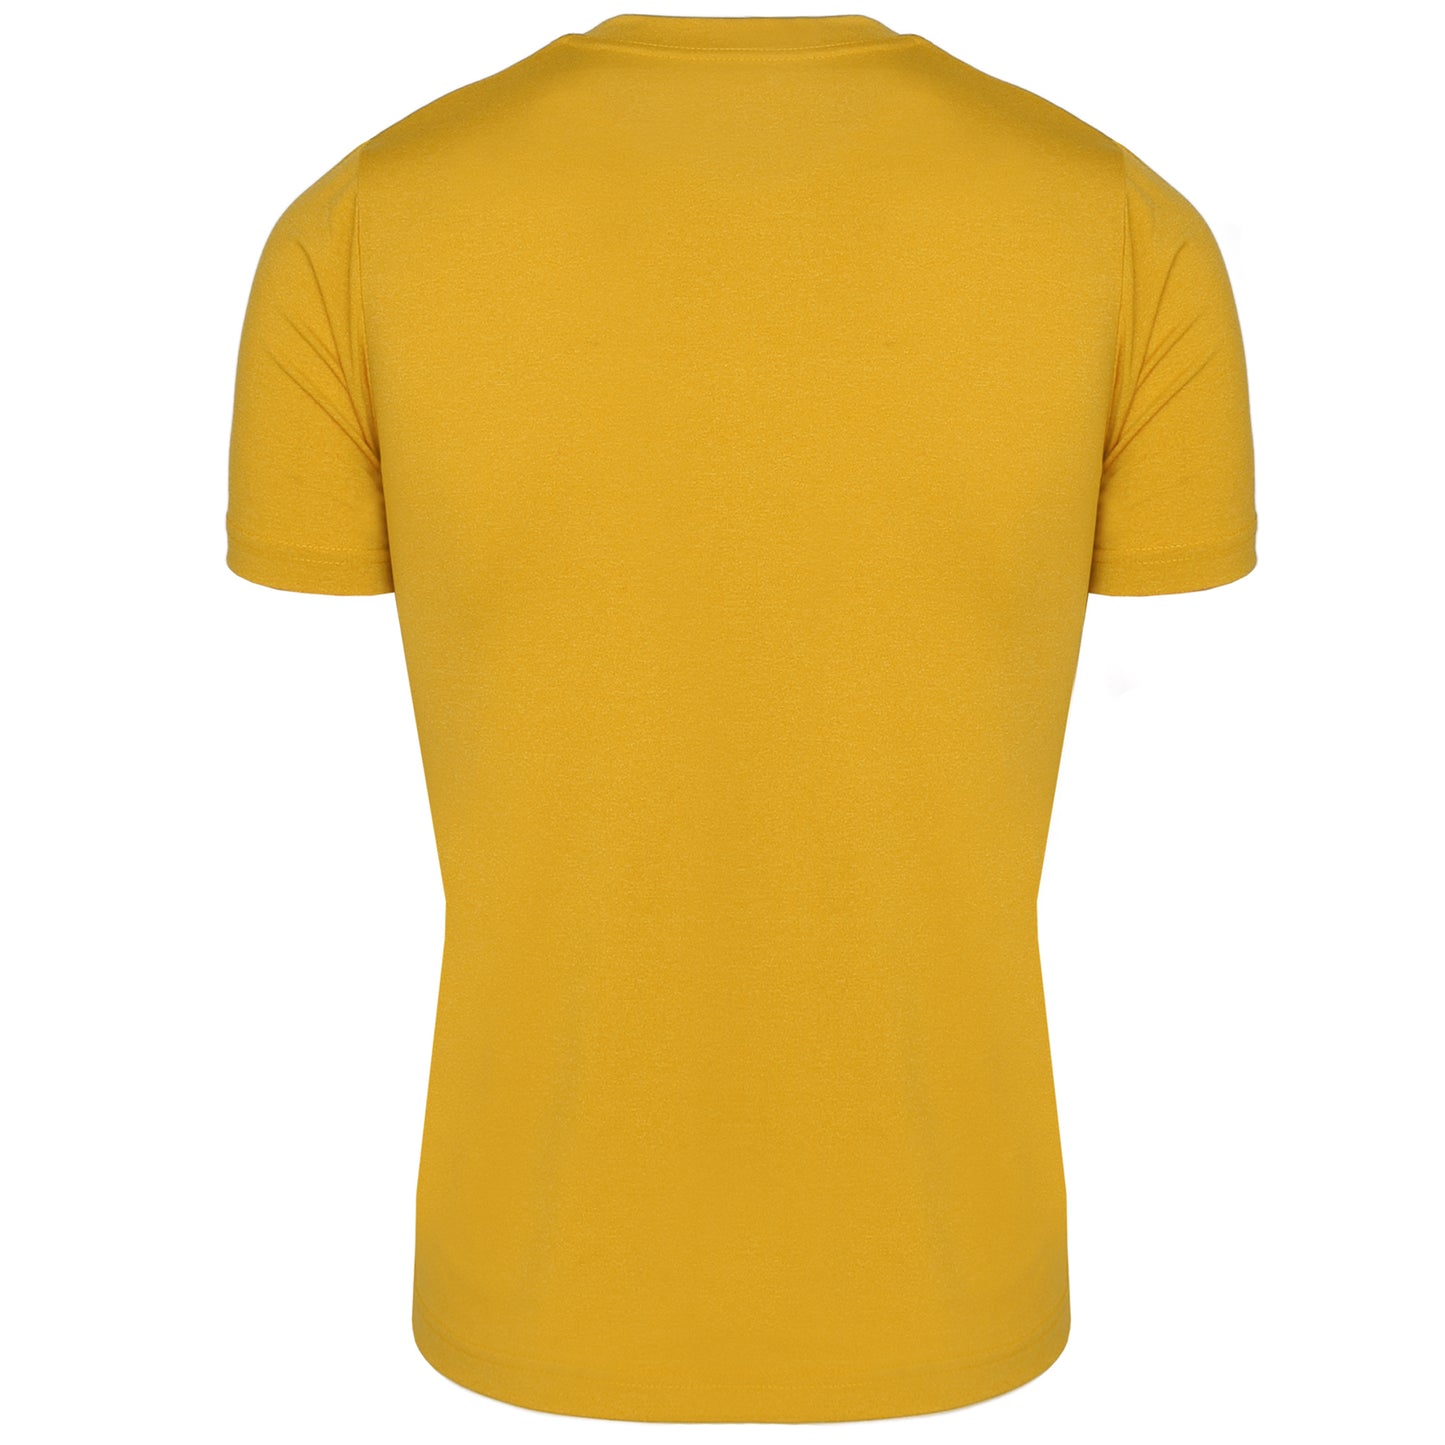 Classic V Neck Dri Short Sleeve T Shirts for Women(7colors)